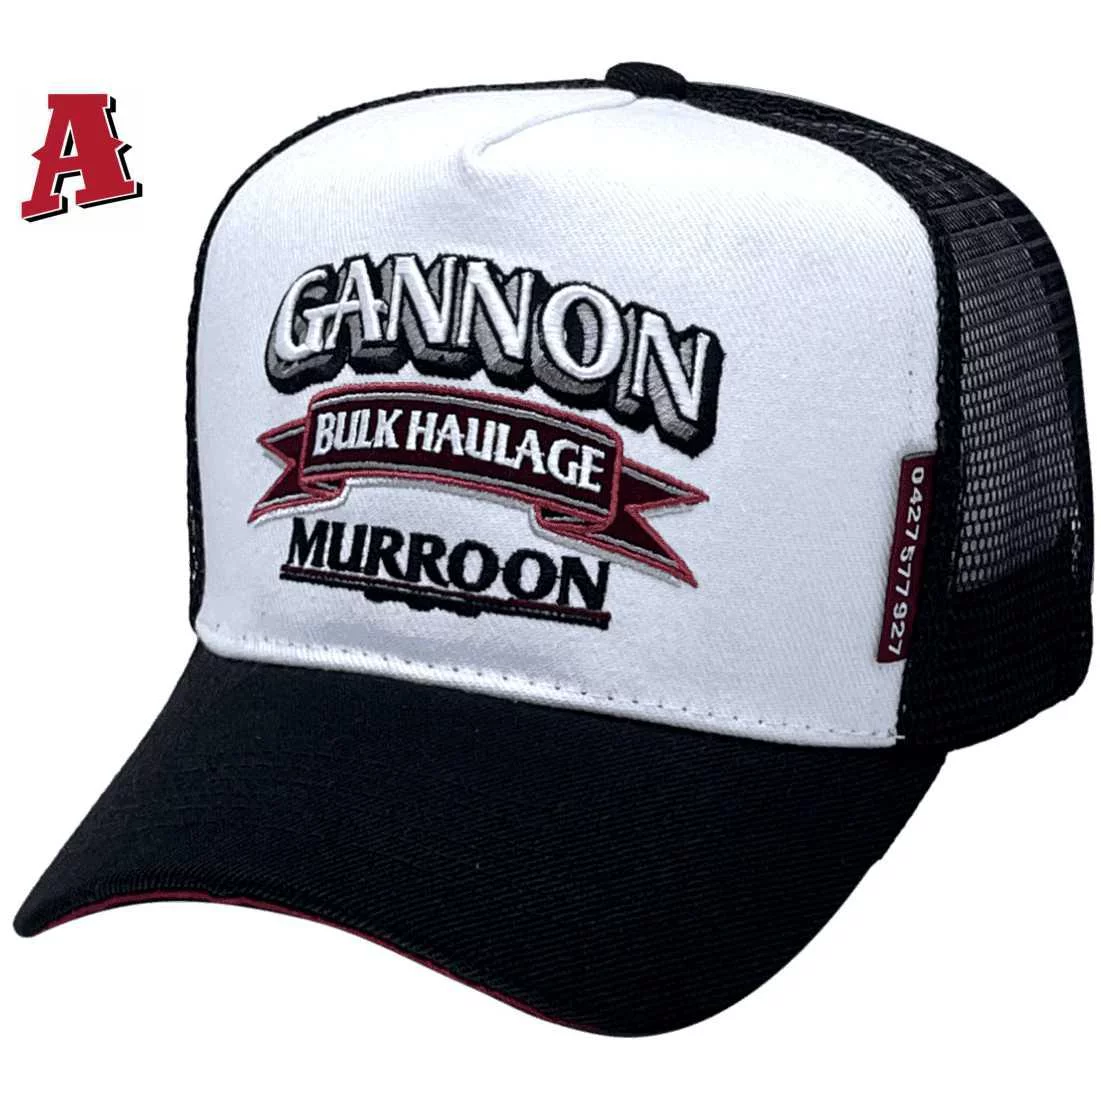 Gannon Bulk Haulage Murroon Vic Basic Aussie Trucker Hats with Australian Head Fit Crown High Profile White Black